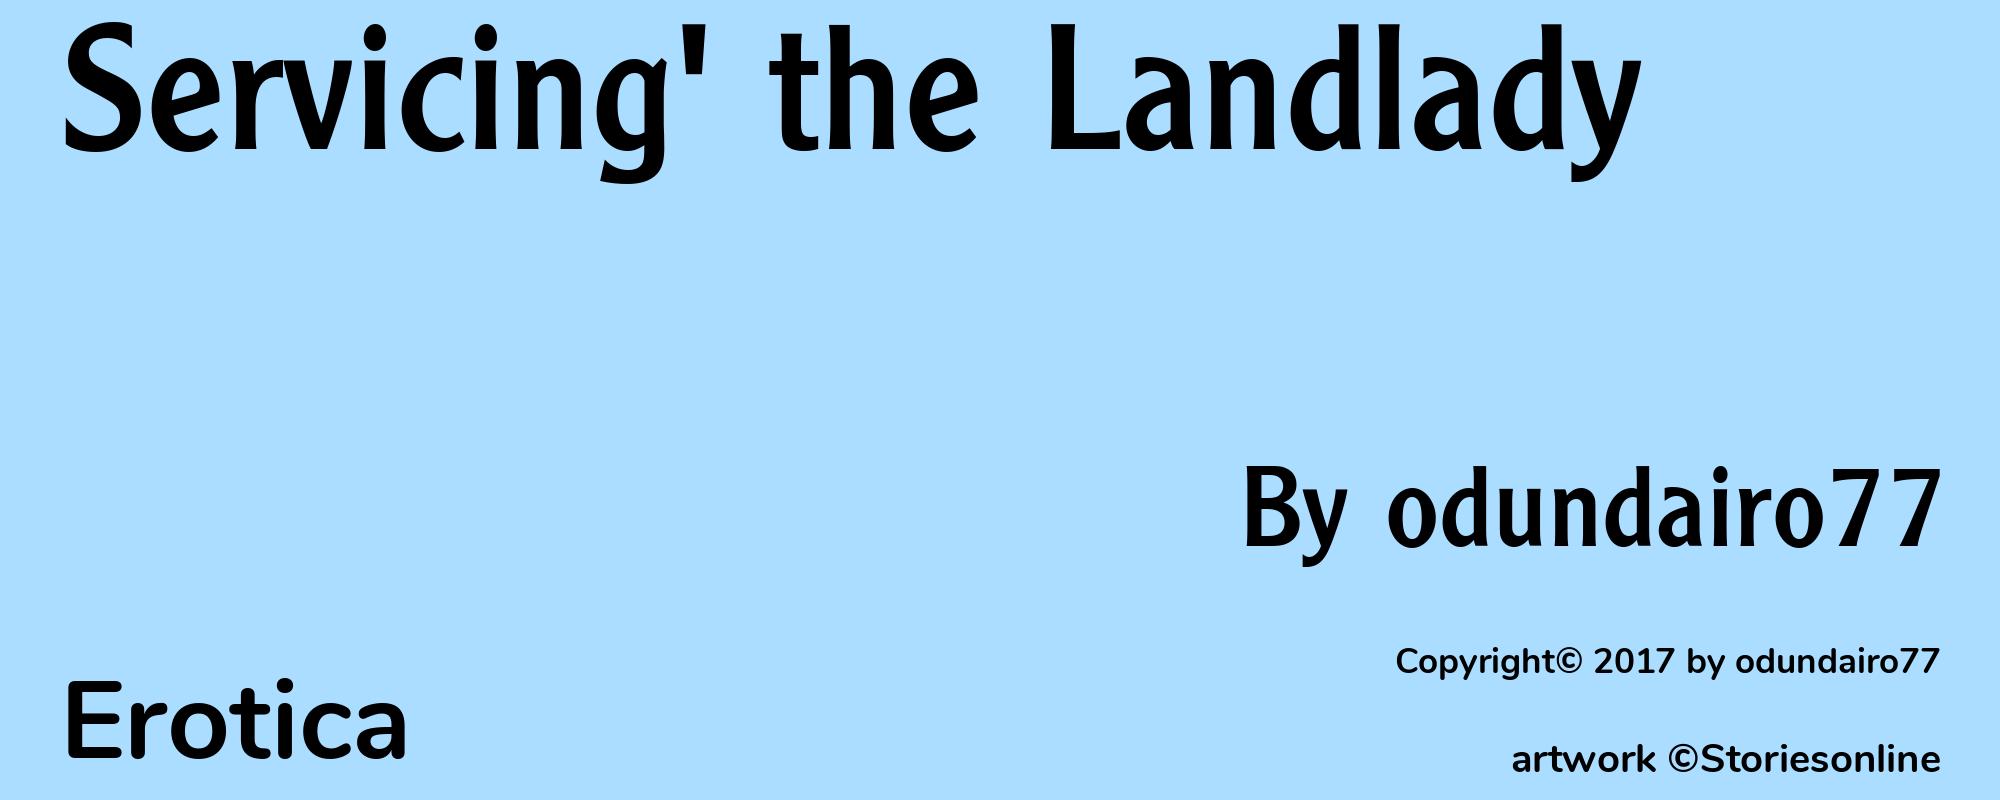 Servicing' the Landlady - Cover